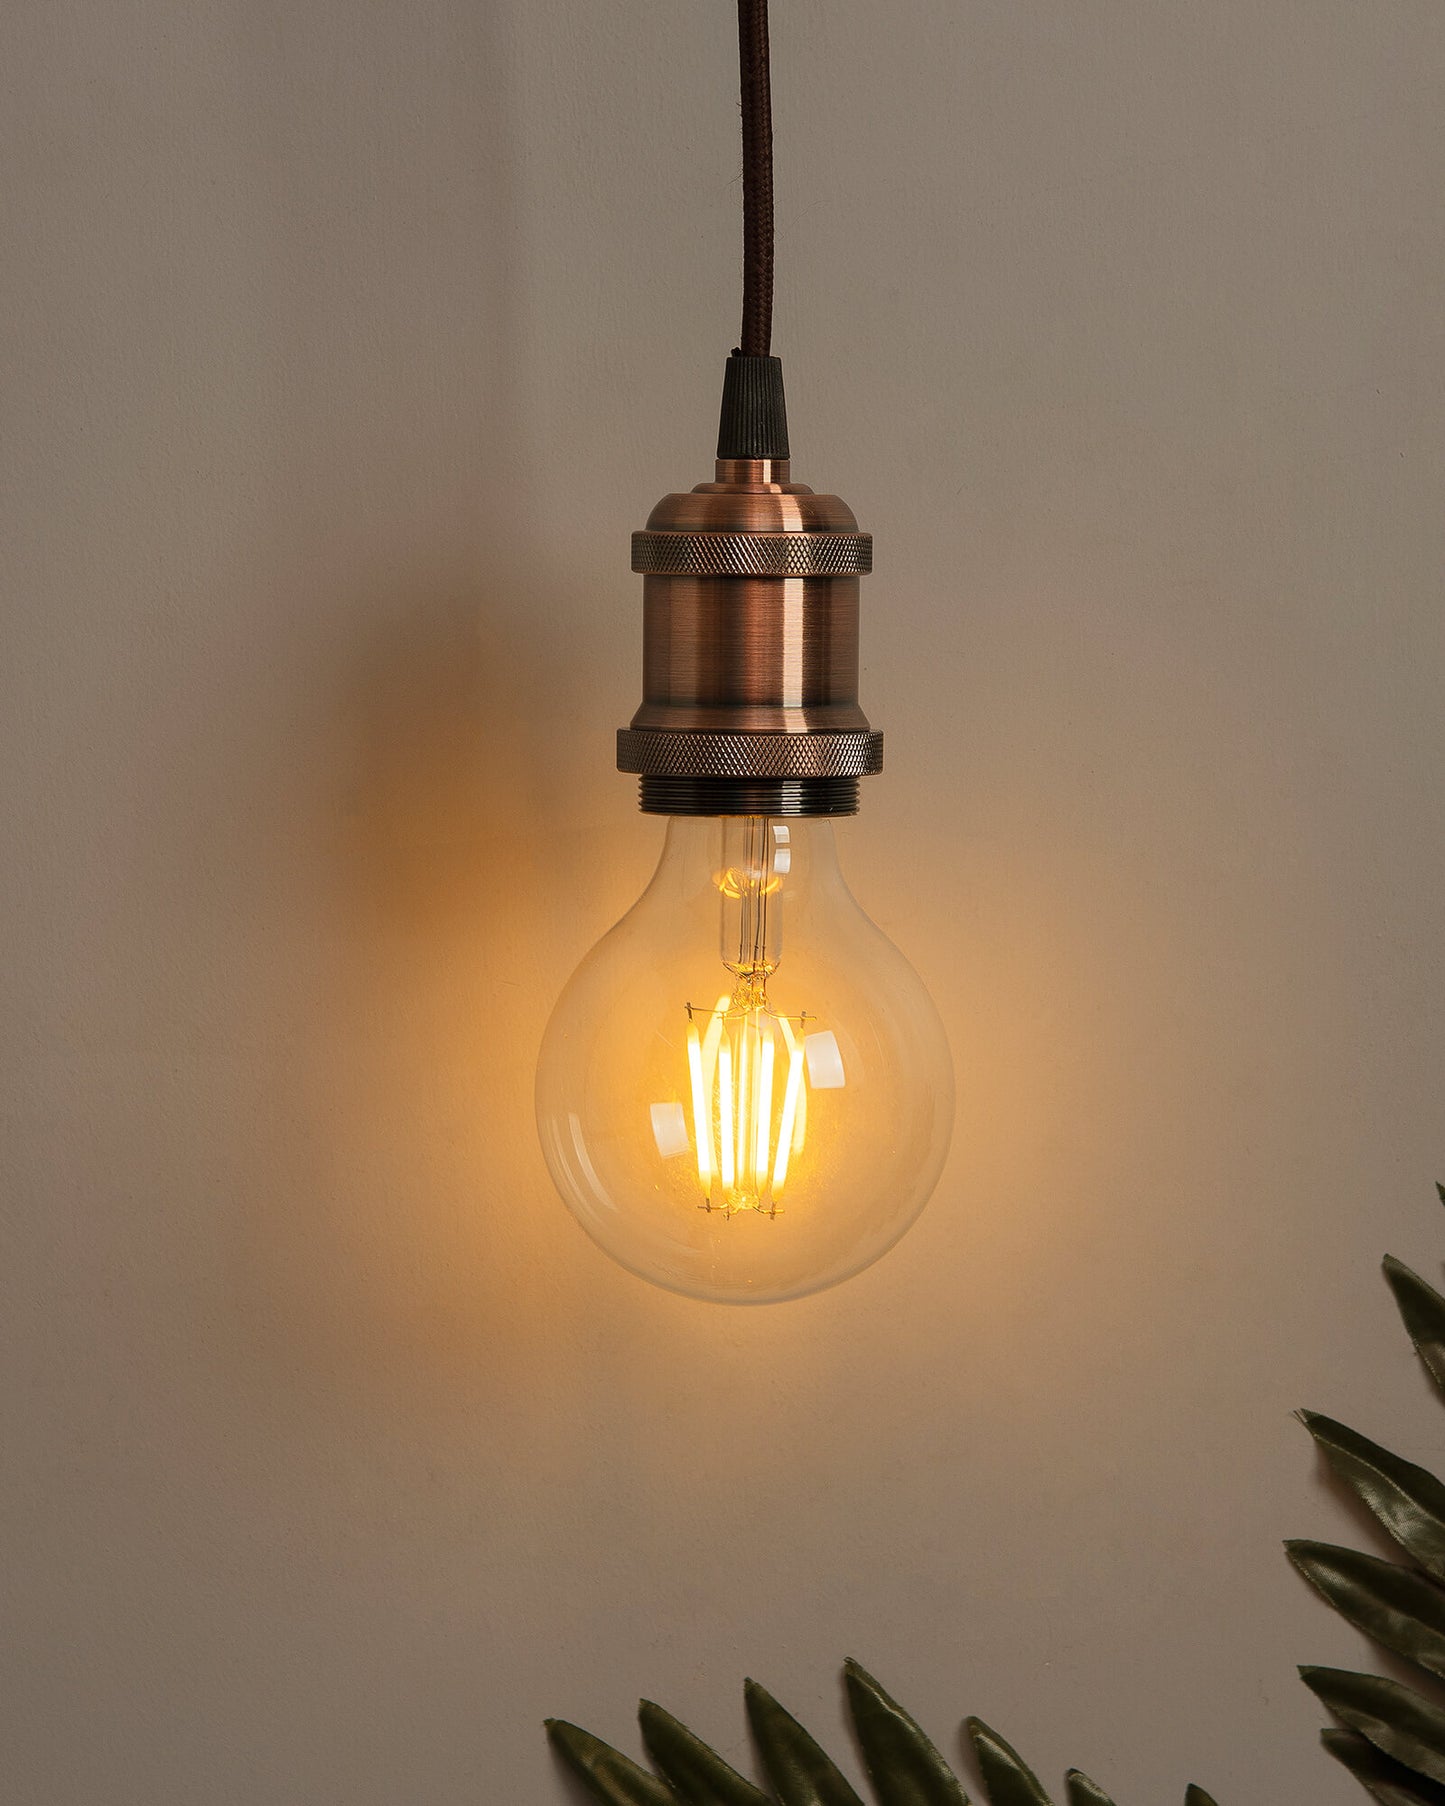 E26/ E27 Industrial Light Hanging Vintage Edison Pendant Lamp Metal